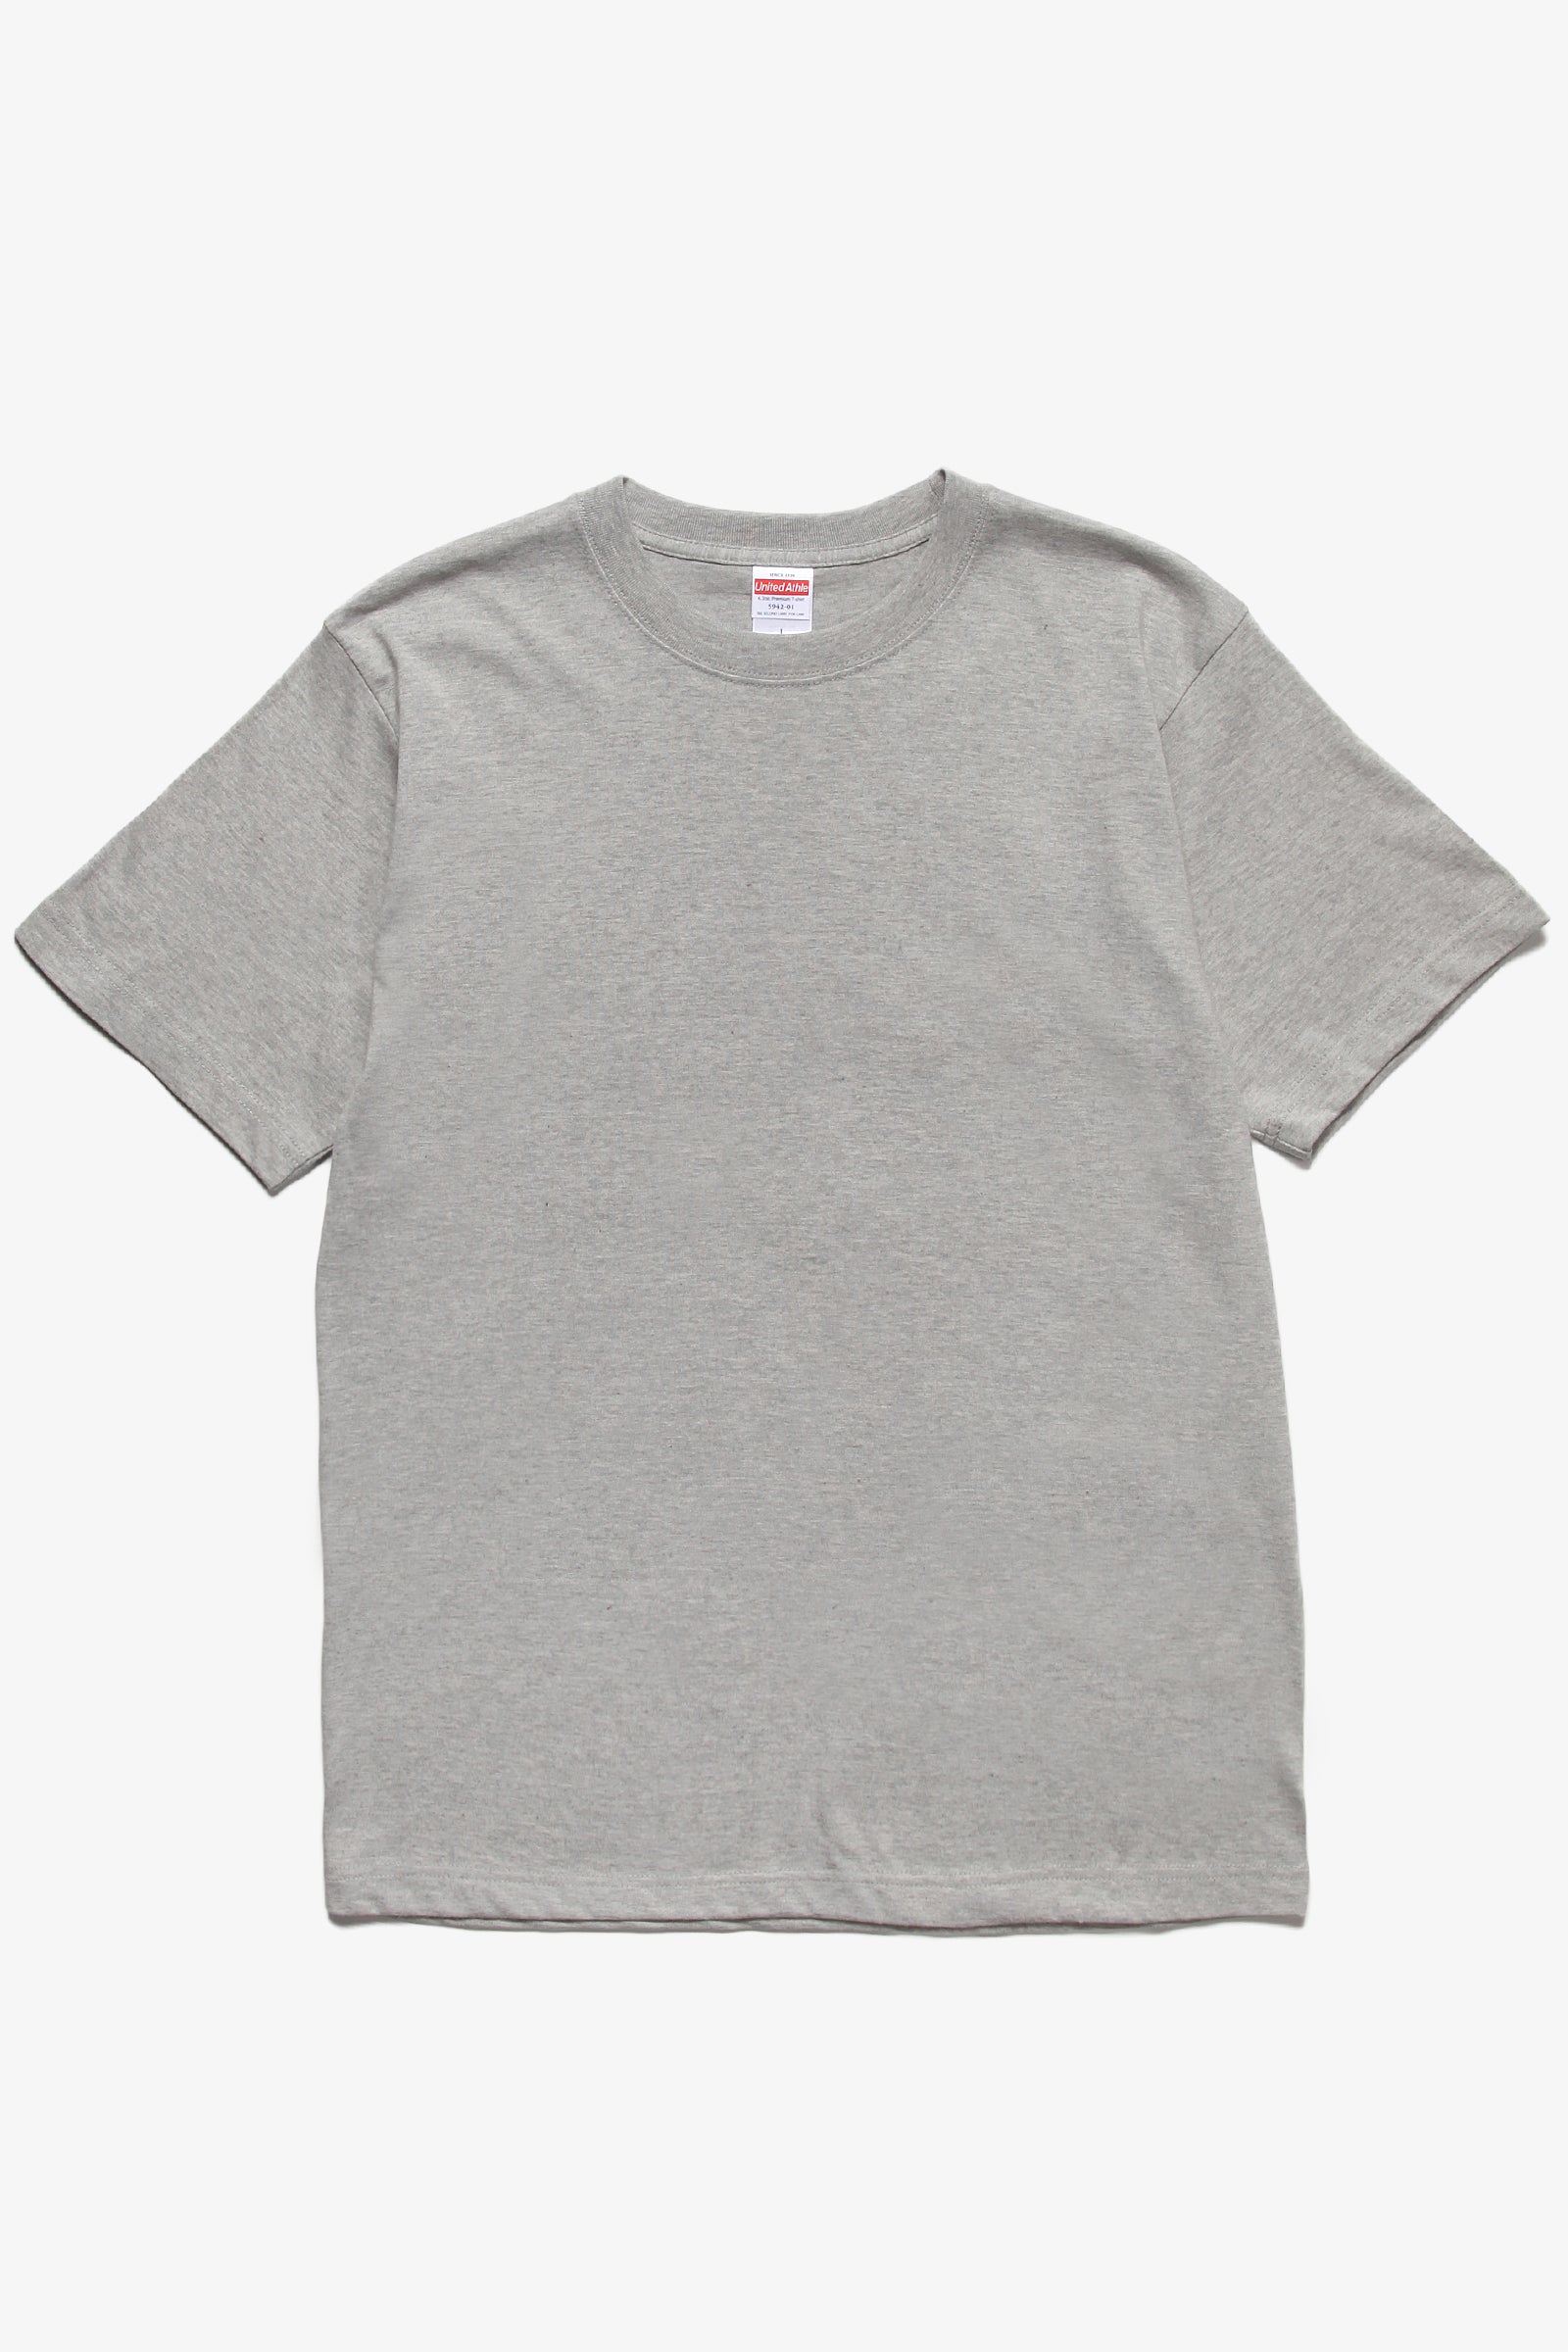 United Athle - 5942 6.2oz Premium T-Shirt - Grey